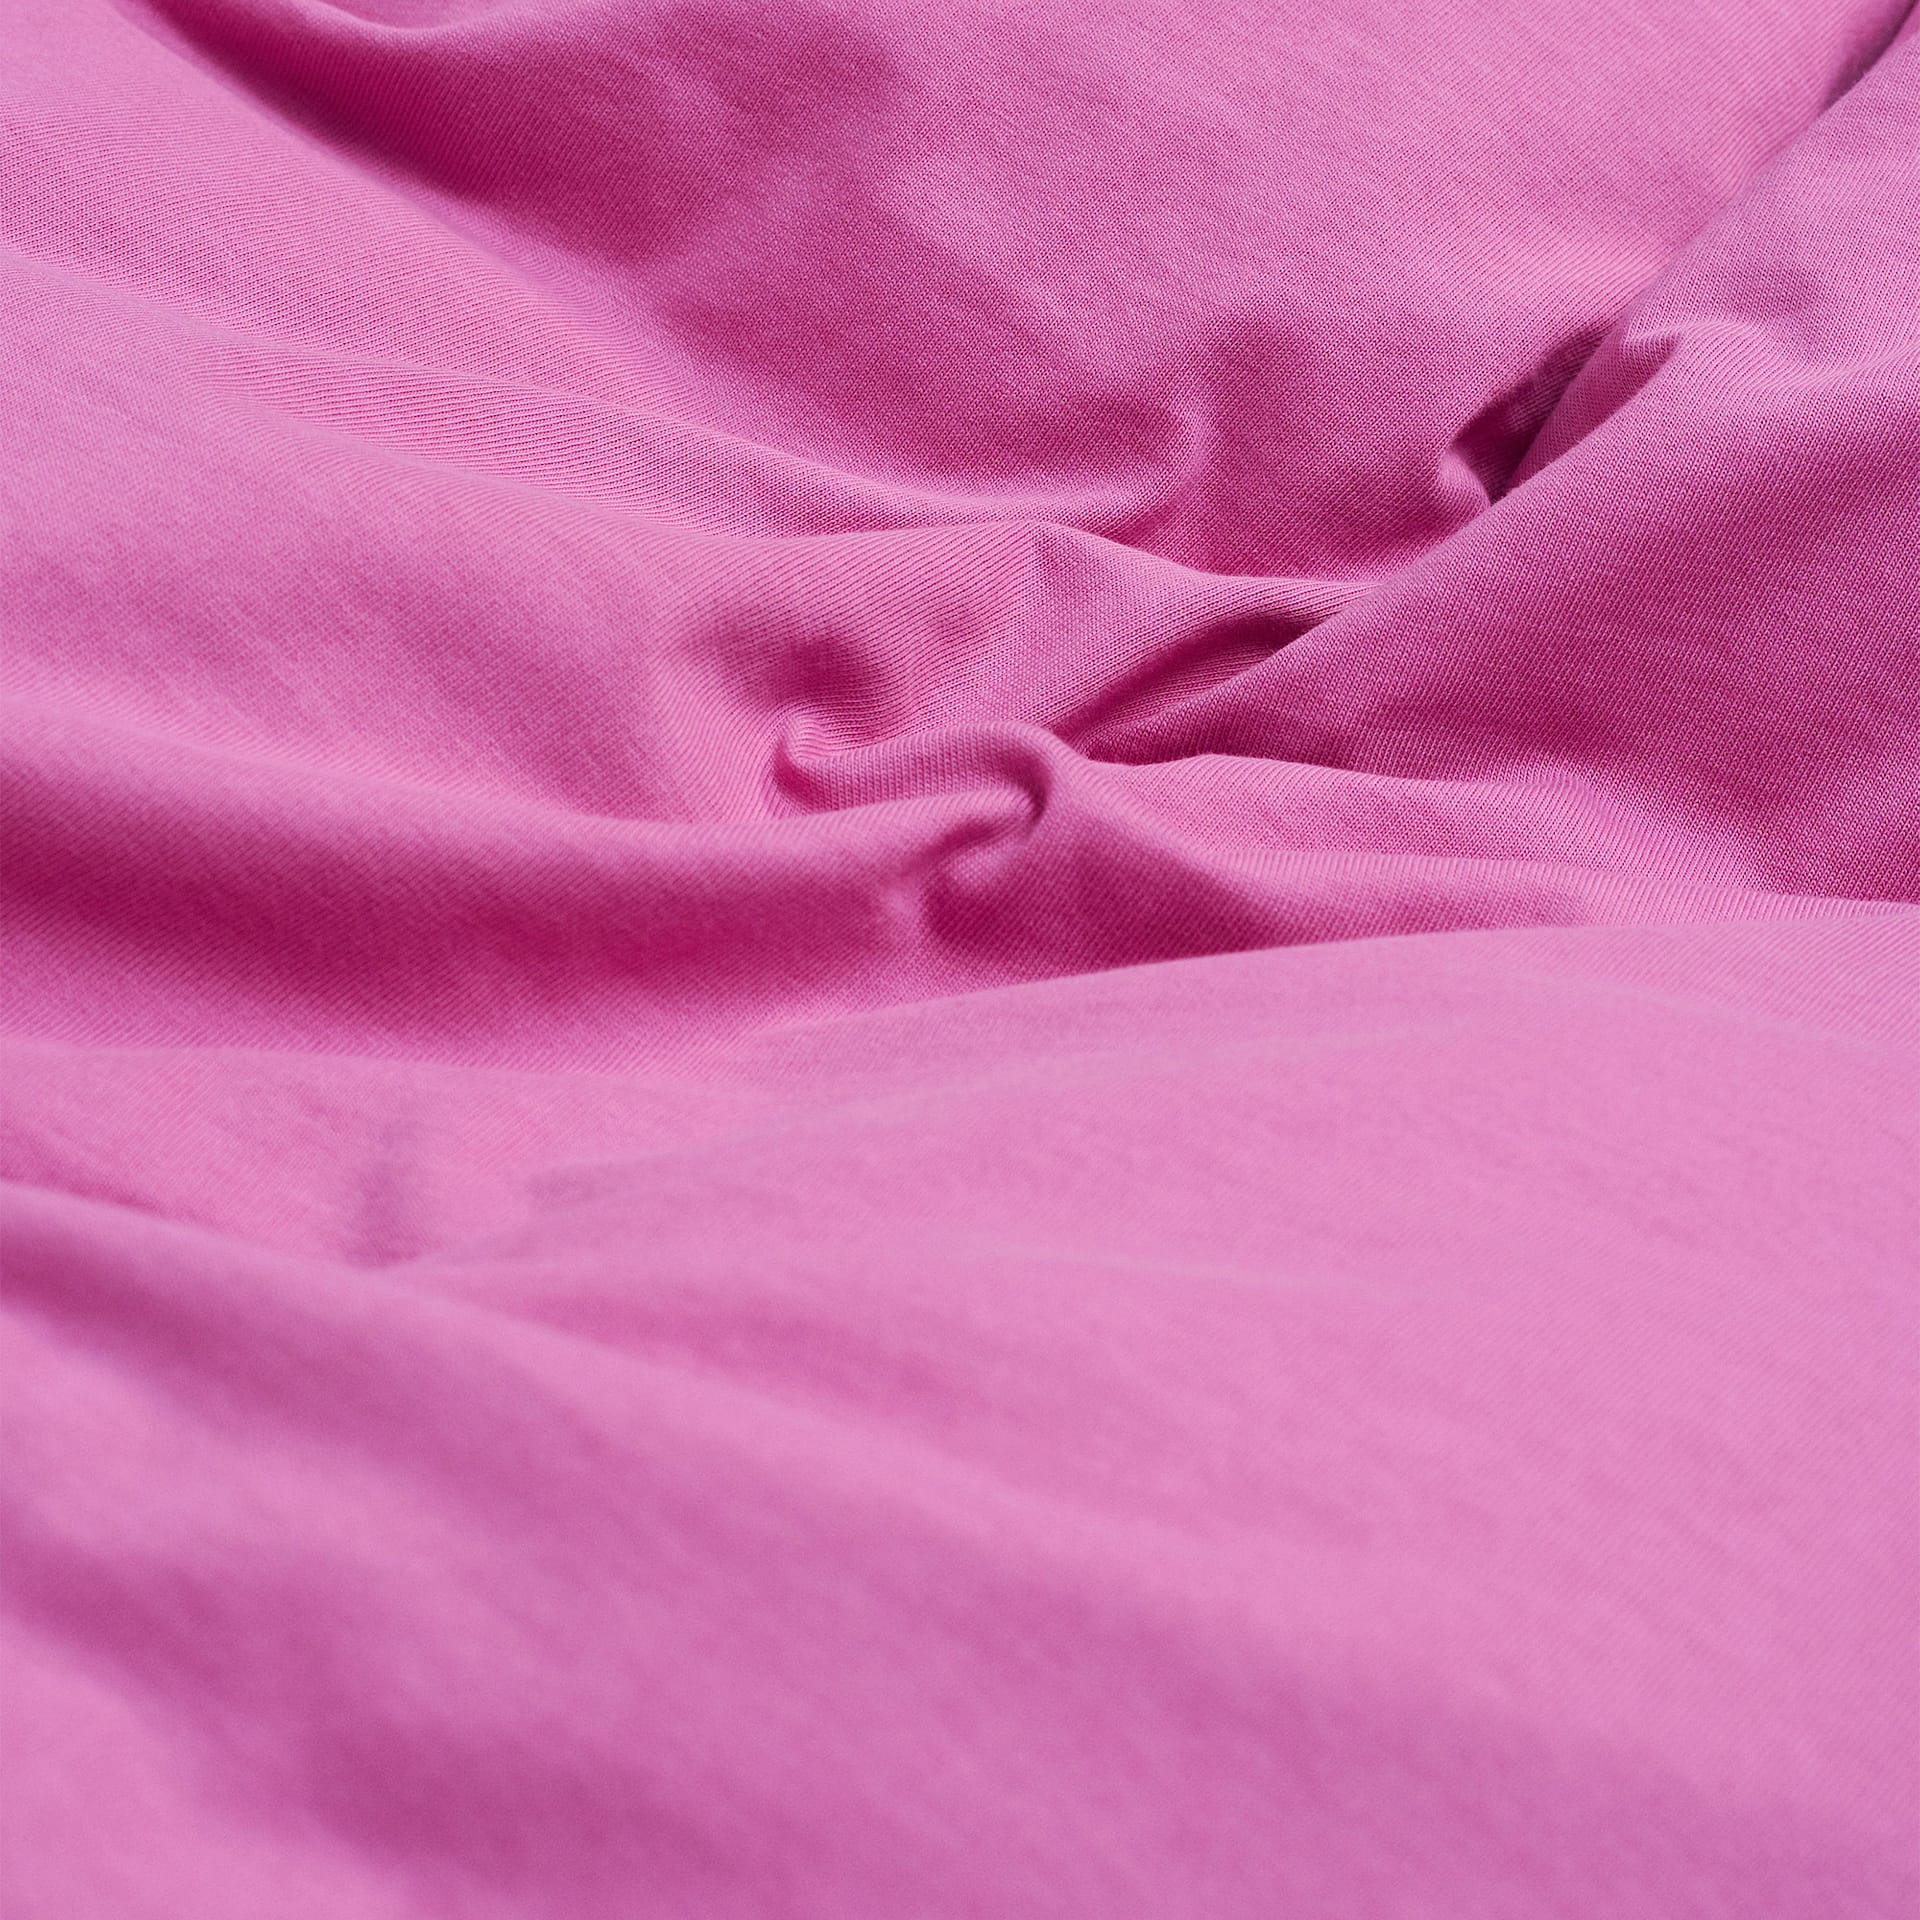 Nude Duvet Cover Jersey - Washed Orchid Pink - Magniberg - NO GA